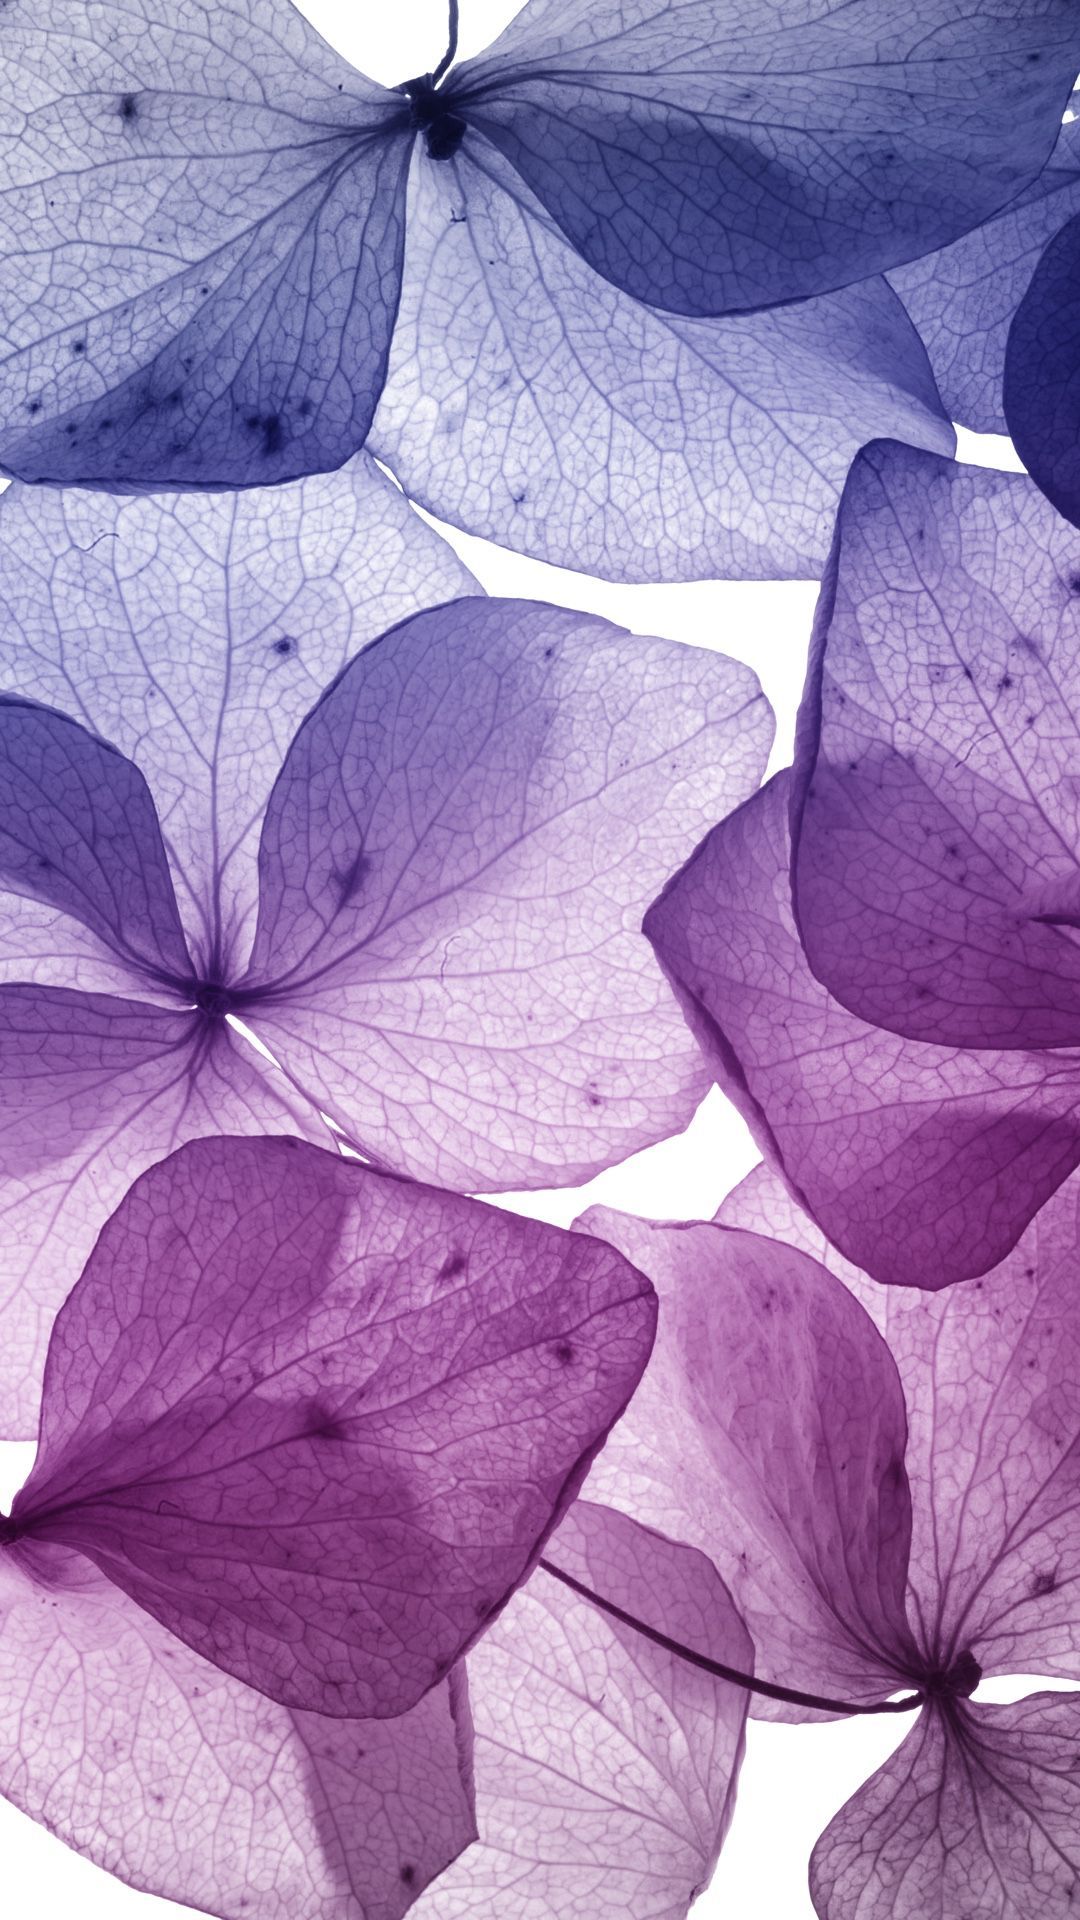 Flower wallpaper for your iPhone XR from Everpix #wallpaper